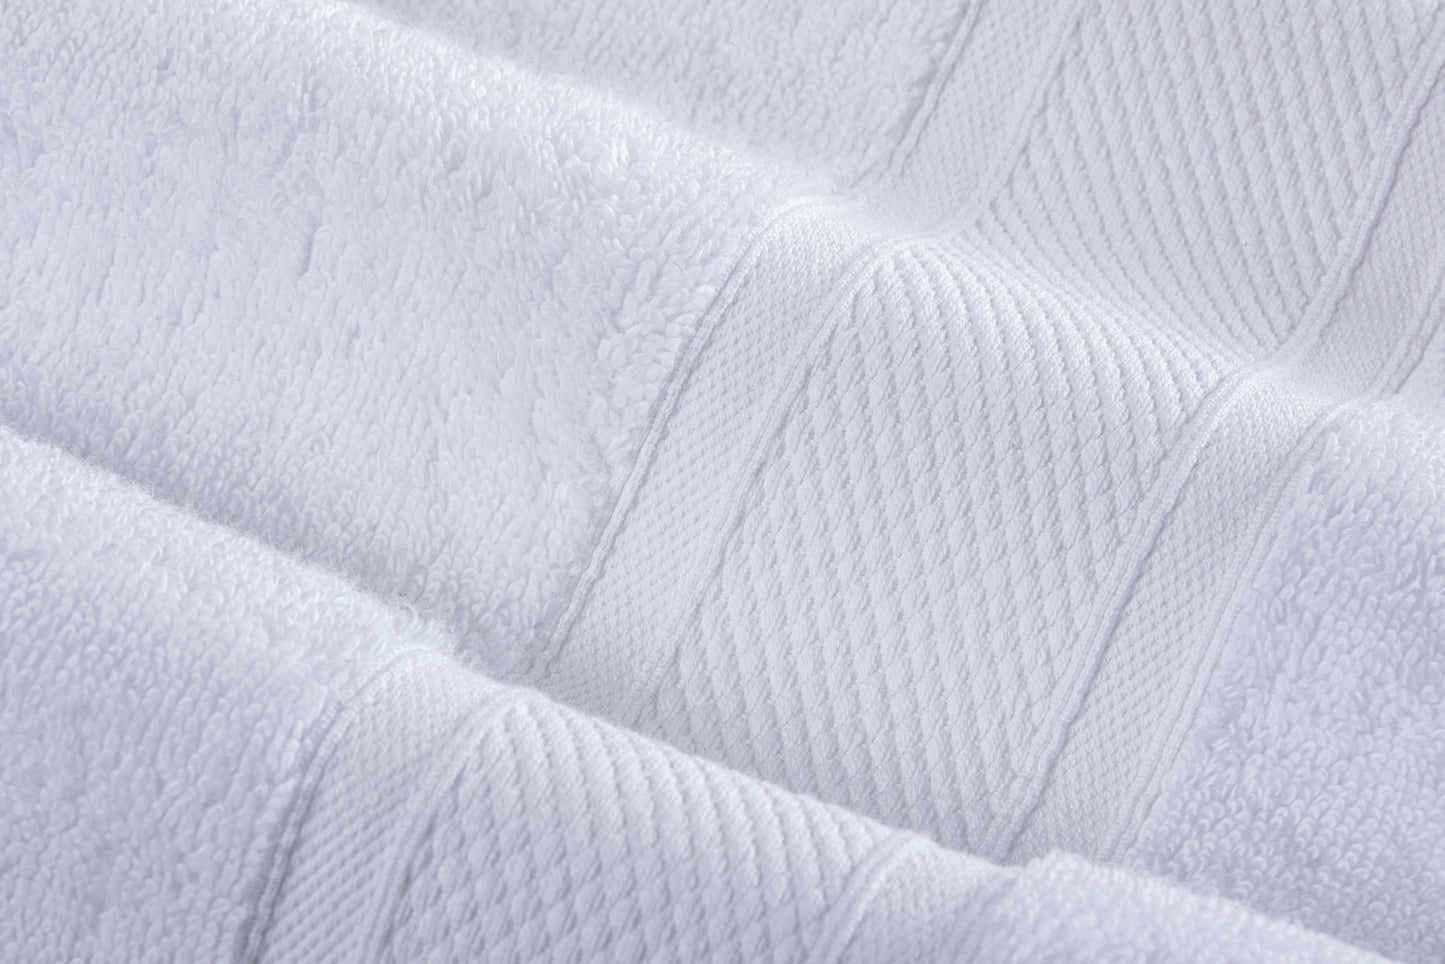 HALLEY Bath Towels 2-Pack - 100% Turkish Cotton Ultra Soft, Absorbent Bathroom Towels - Premium Quality, Machine Washable - White